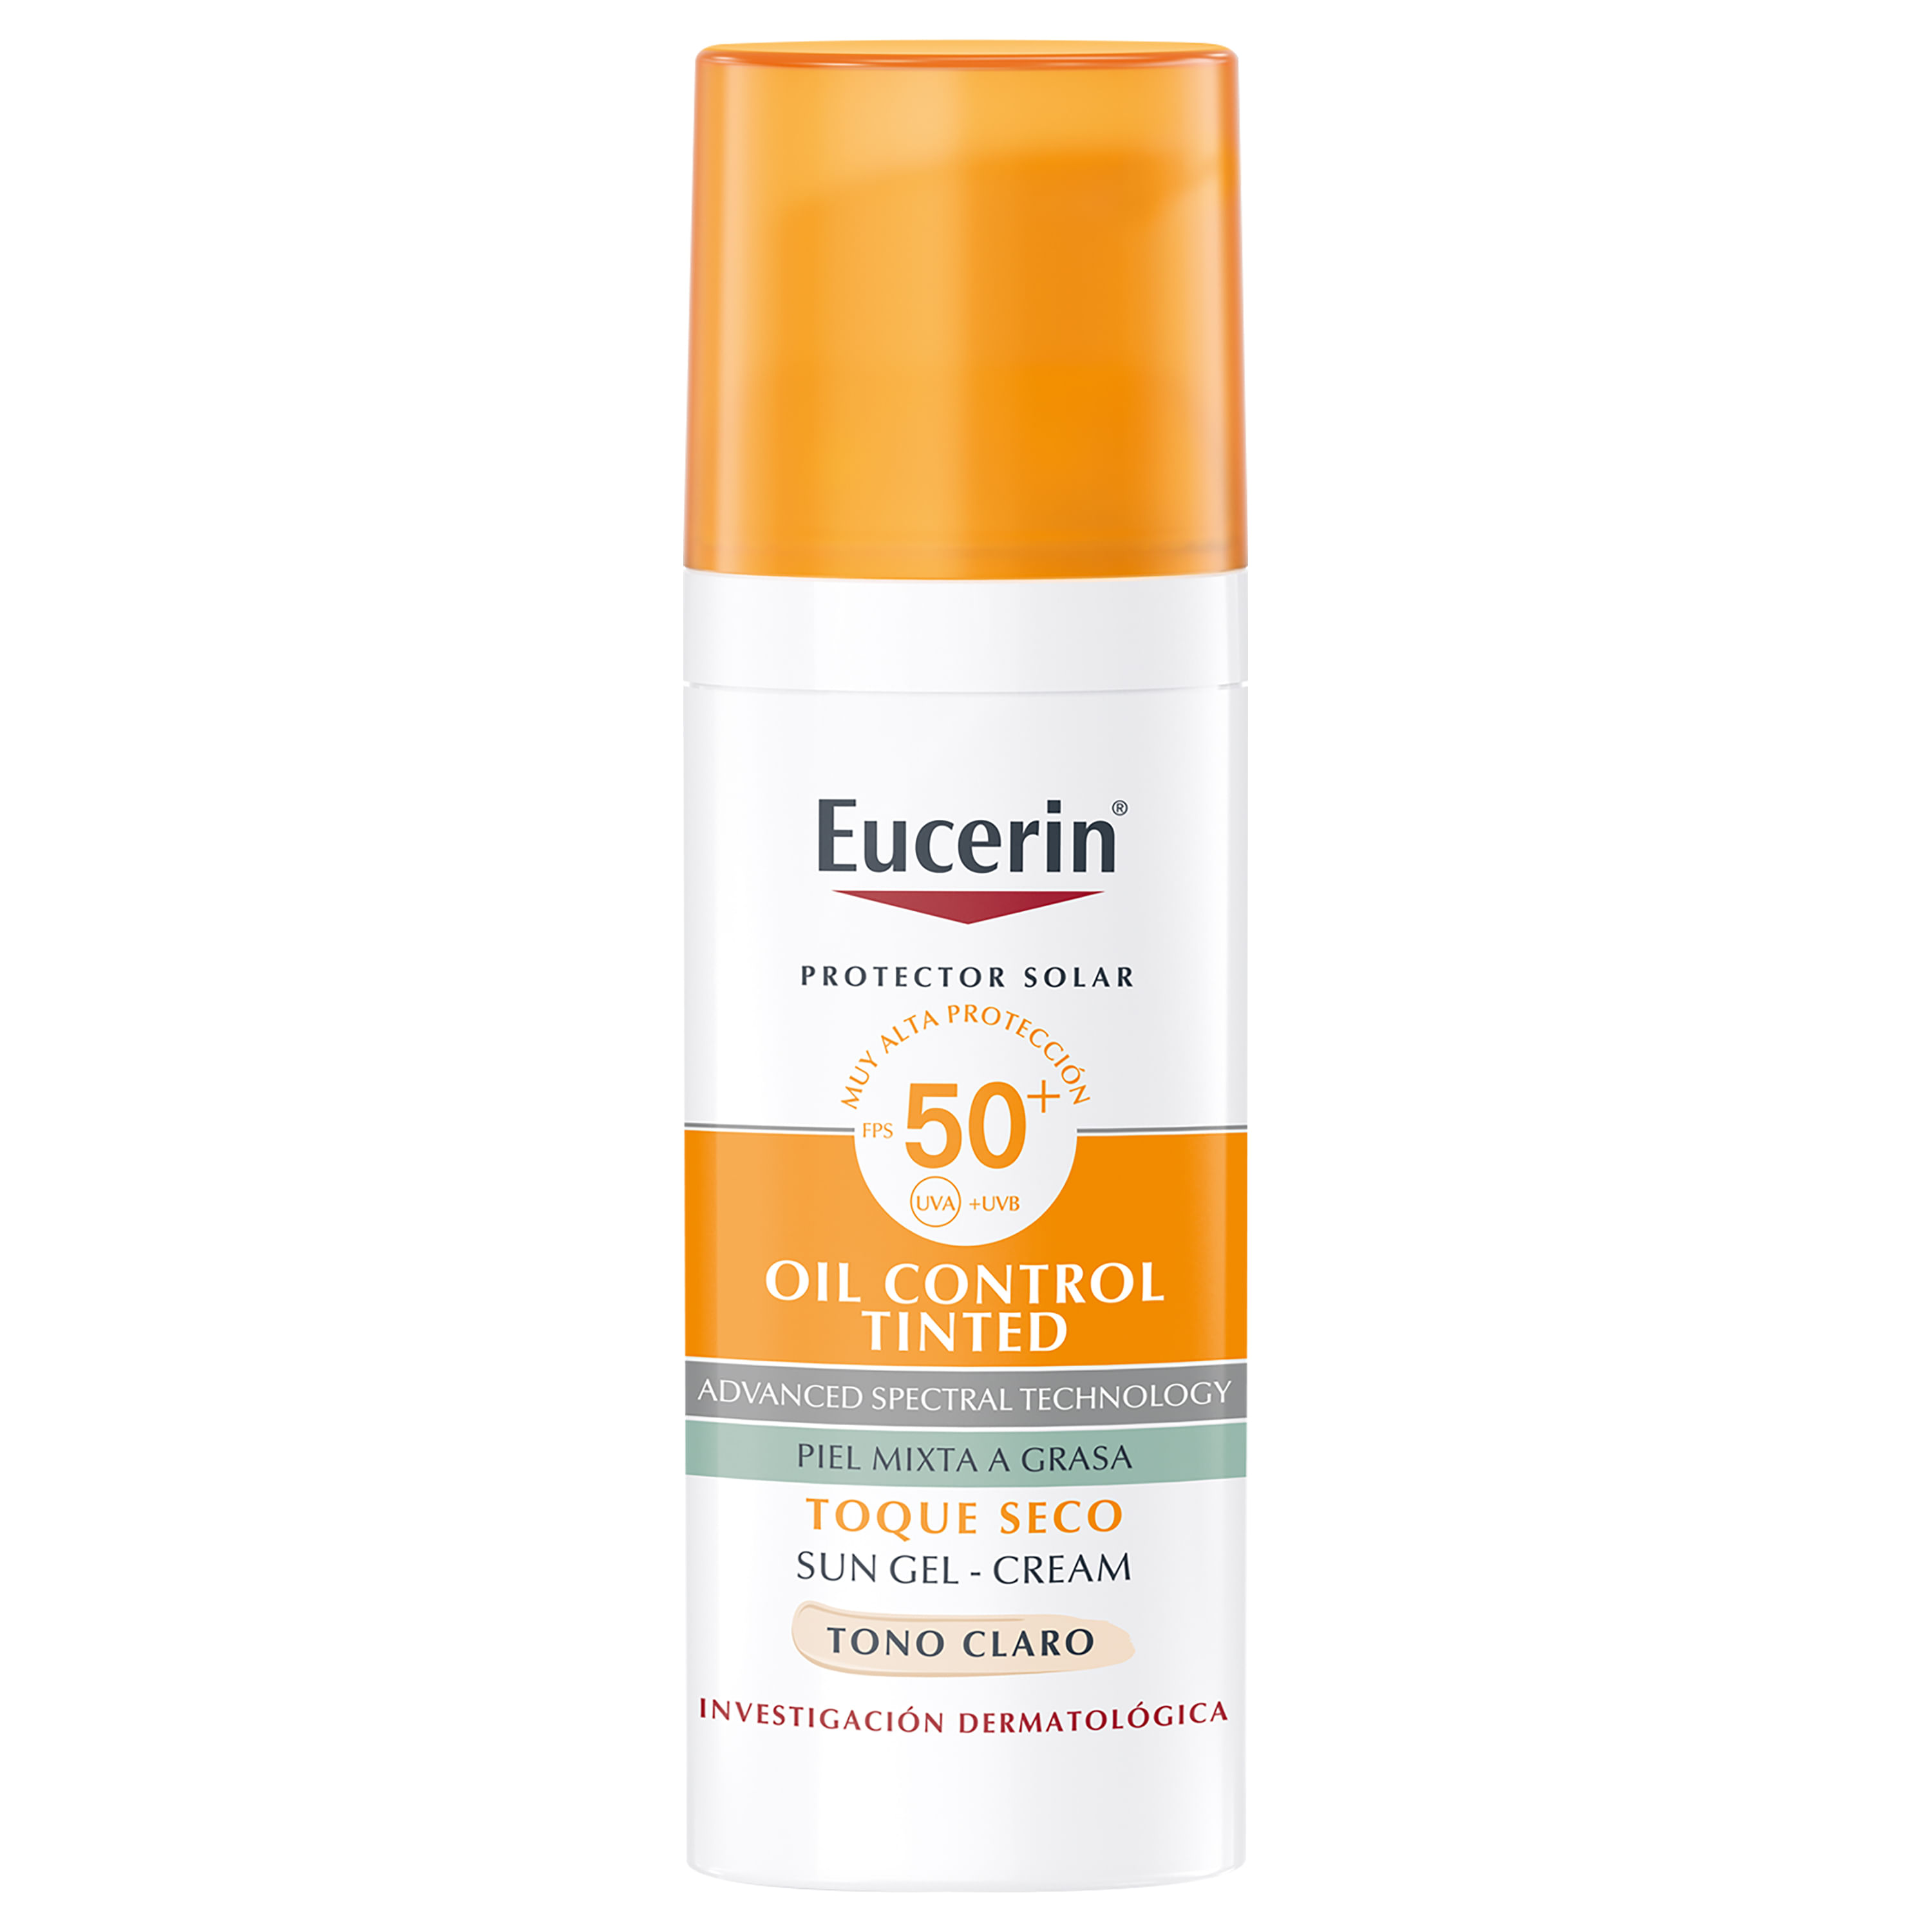 Eucerin-sun-face-oil-control-tono-claro-50ml-1-24210